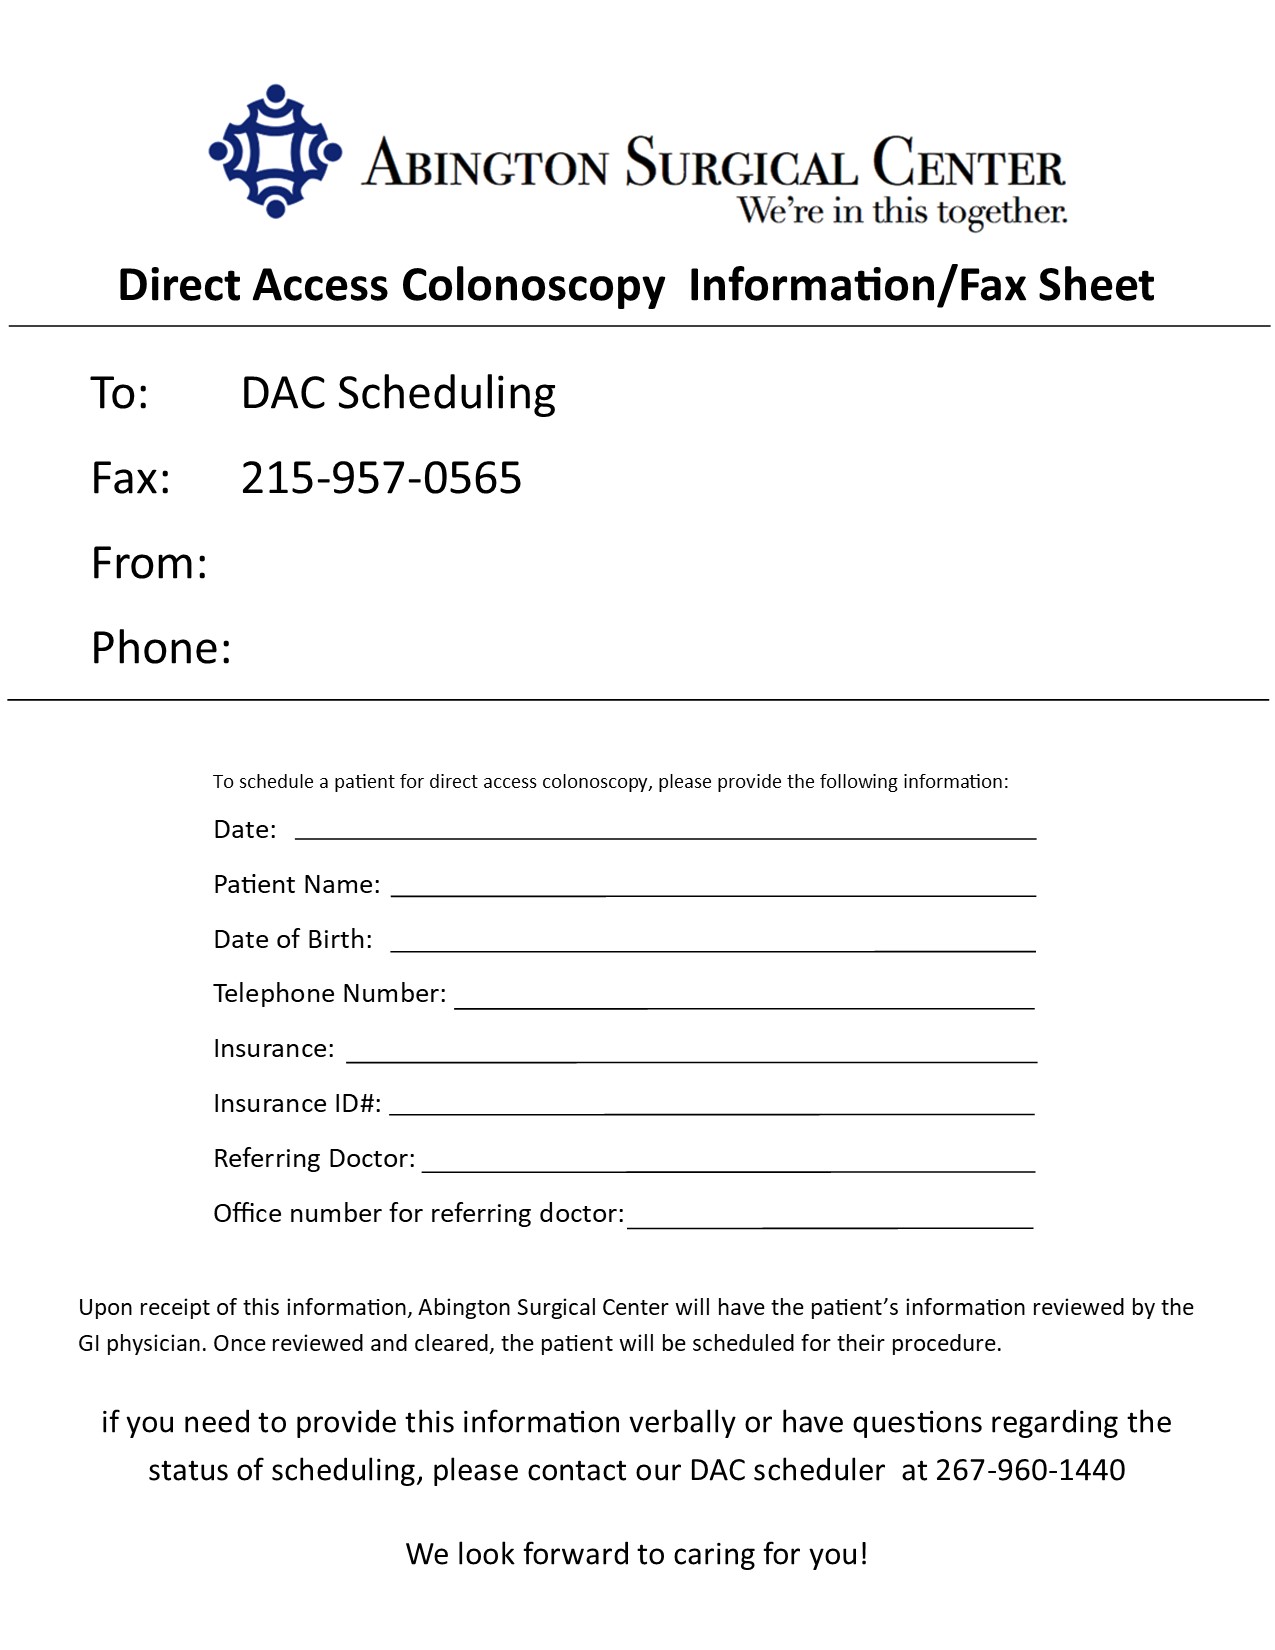 dac-fax-in-sheet-